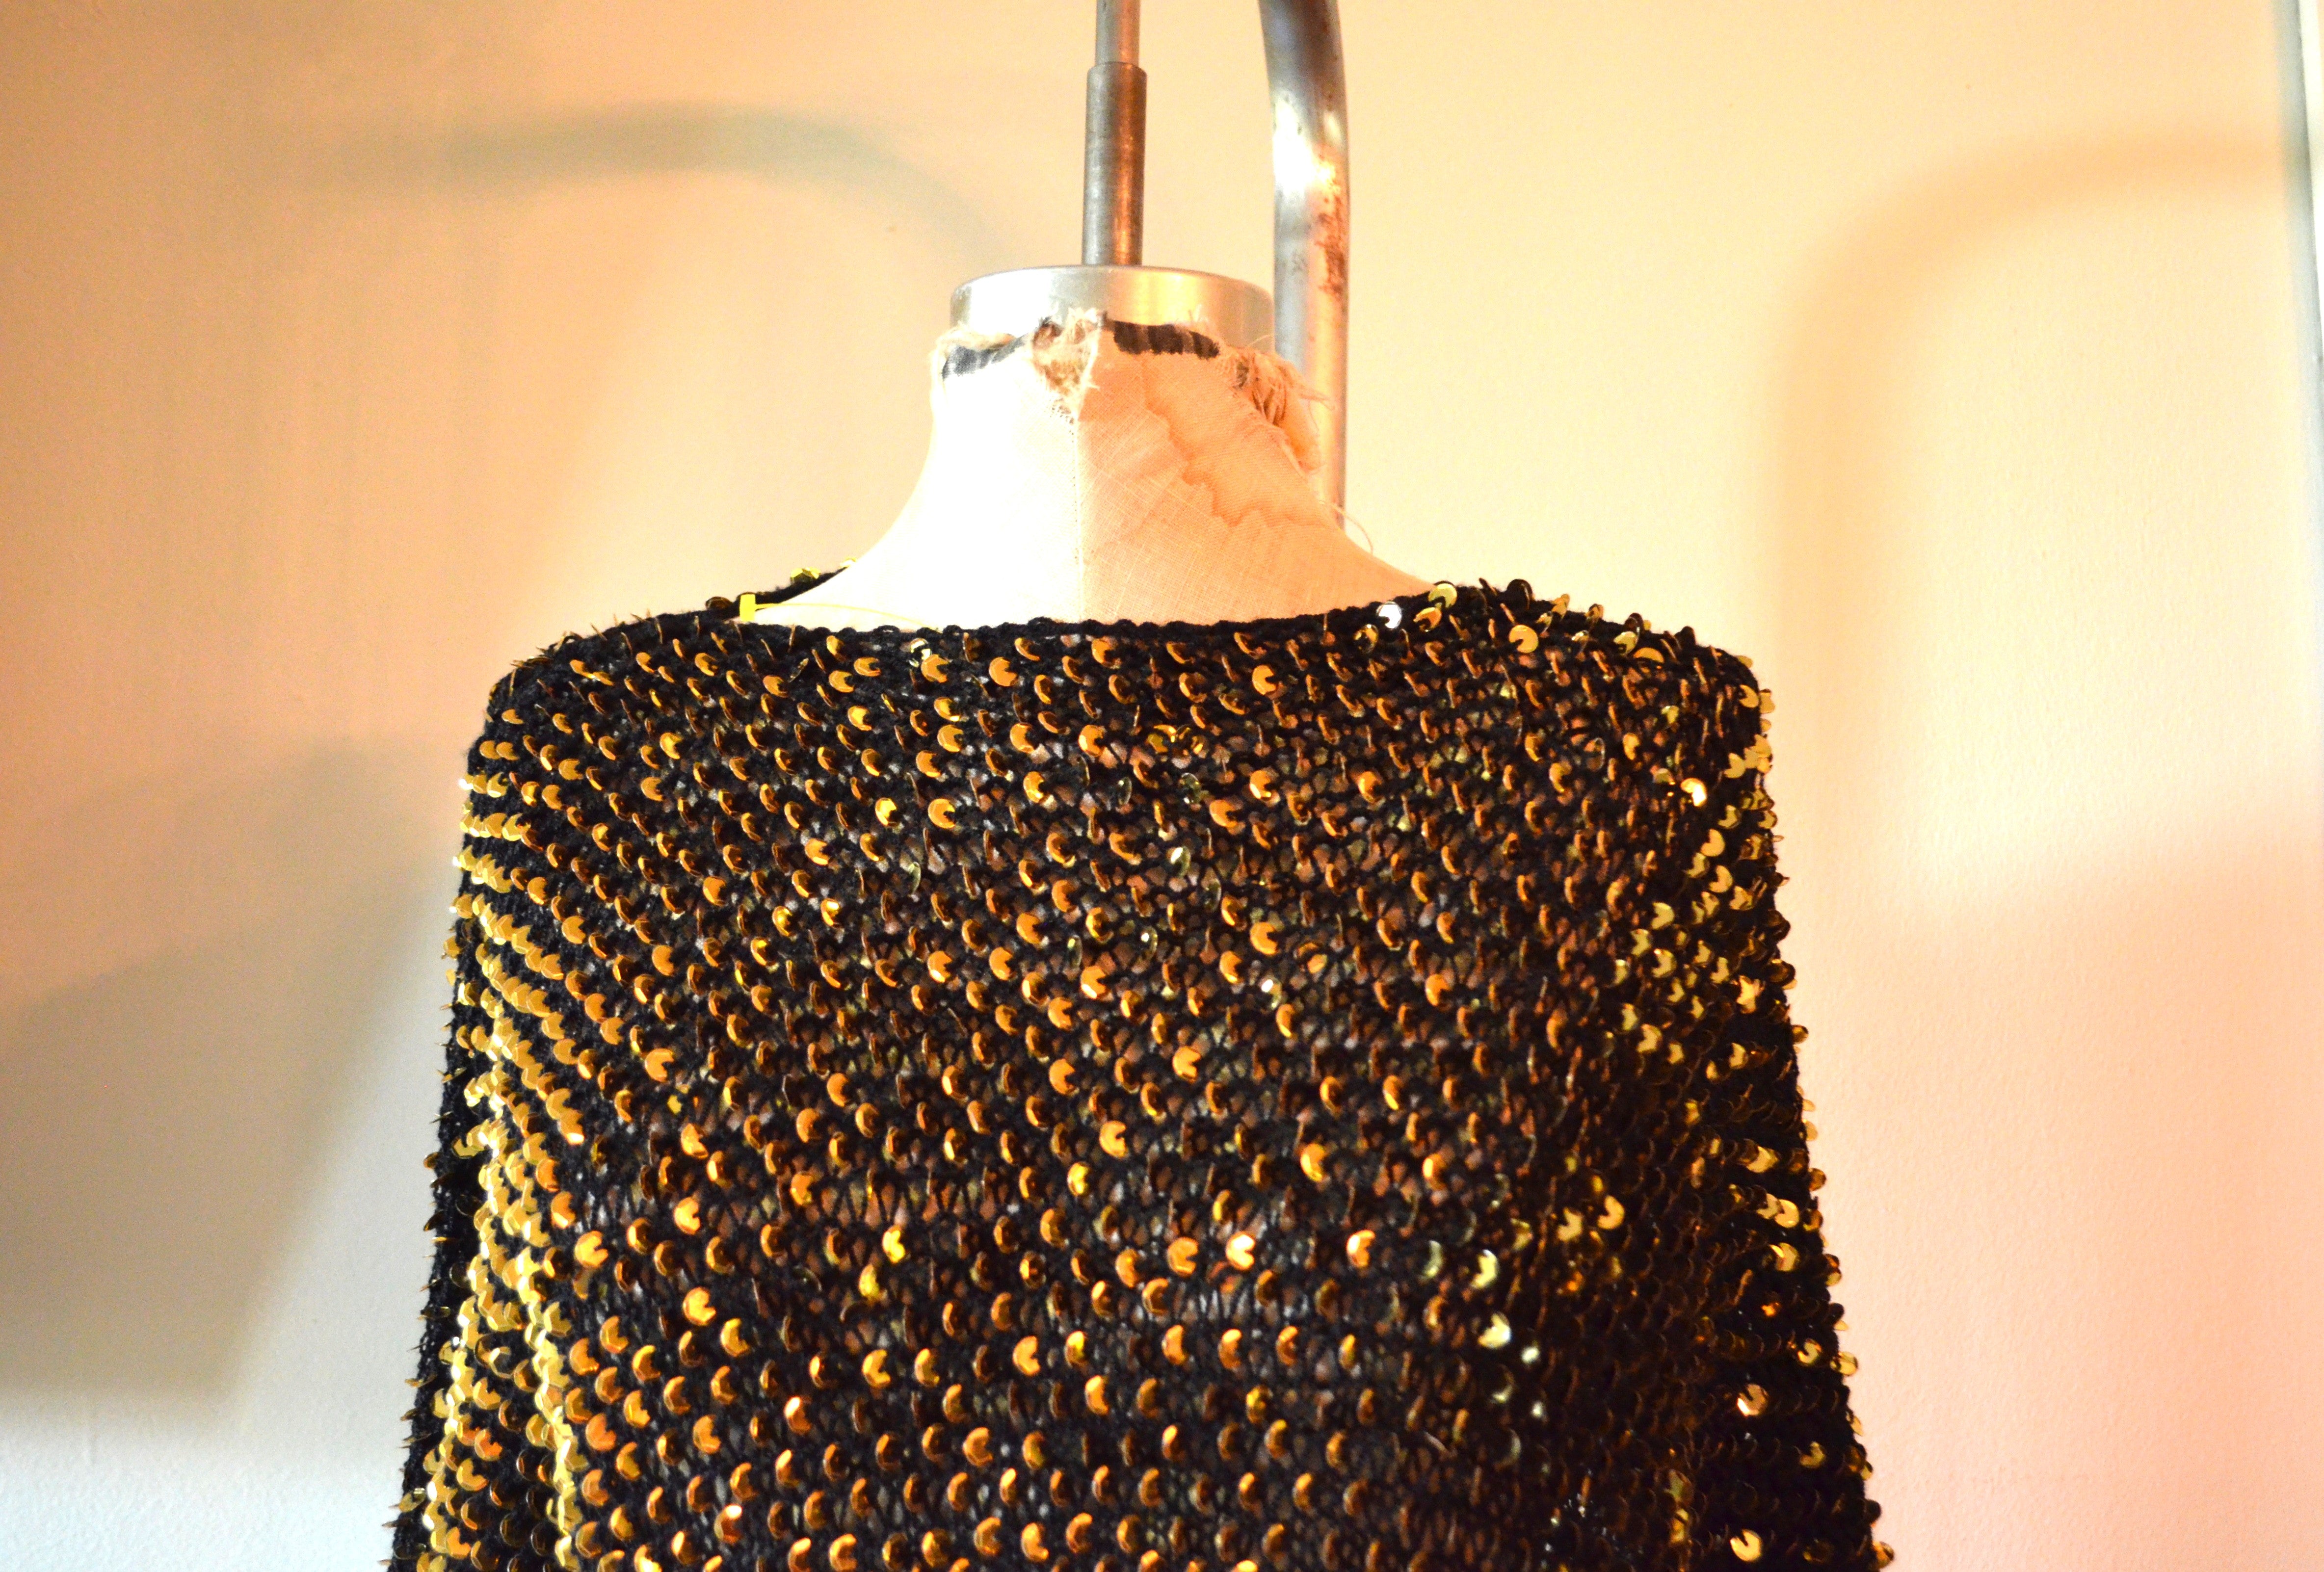 Crochet Asymmetrical Gold Sequins Knit top Lace Sweater Metallic Top Bohemian